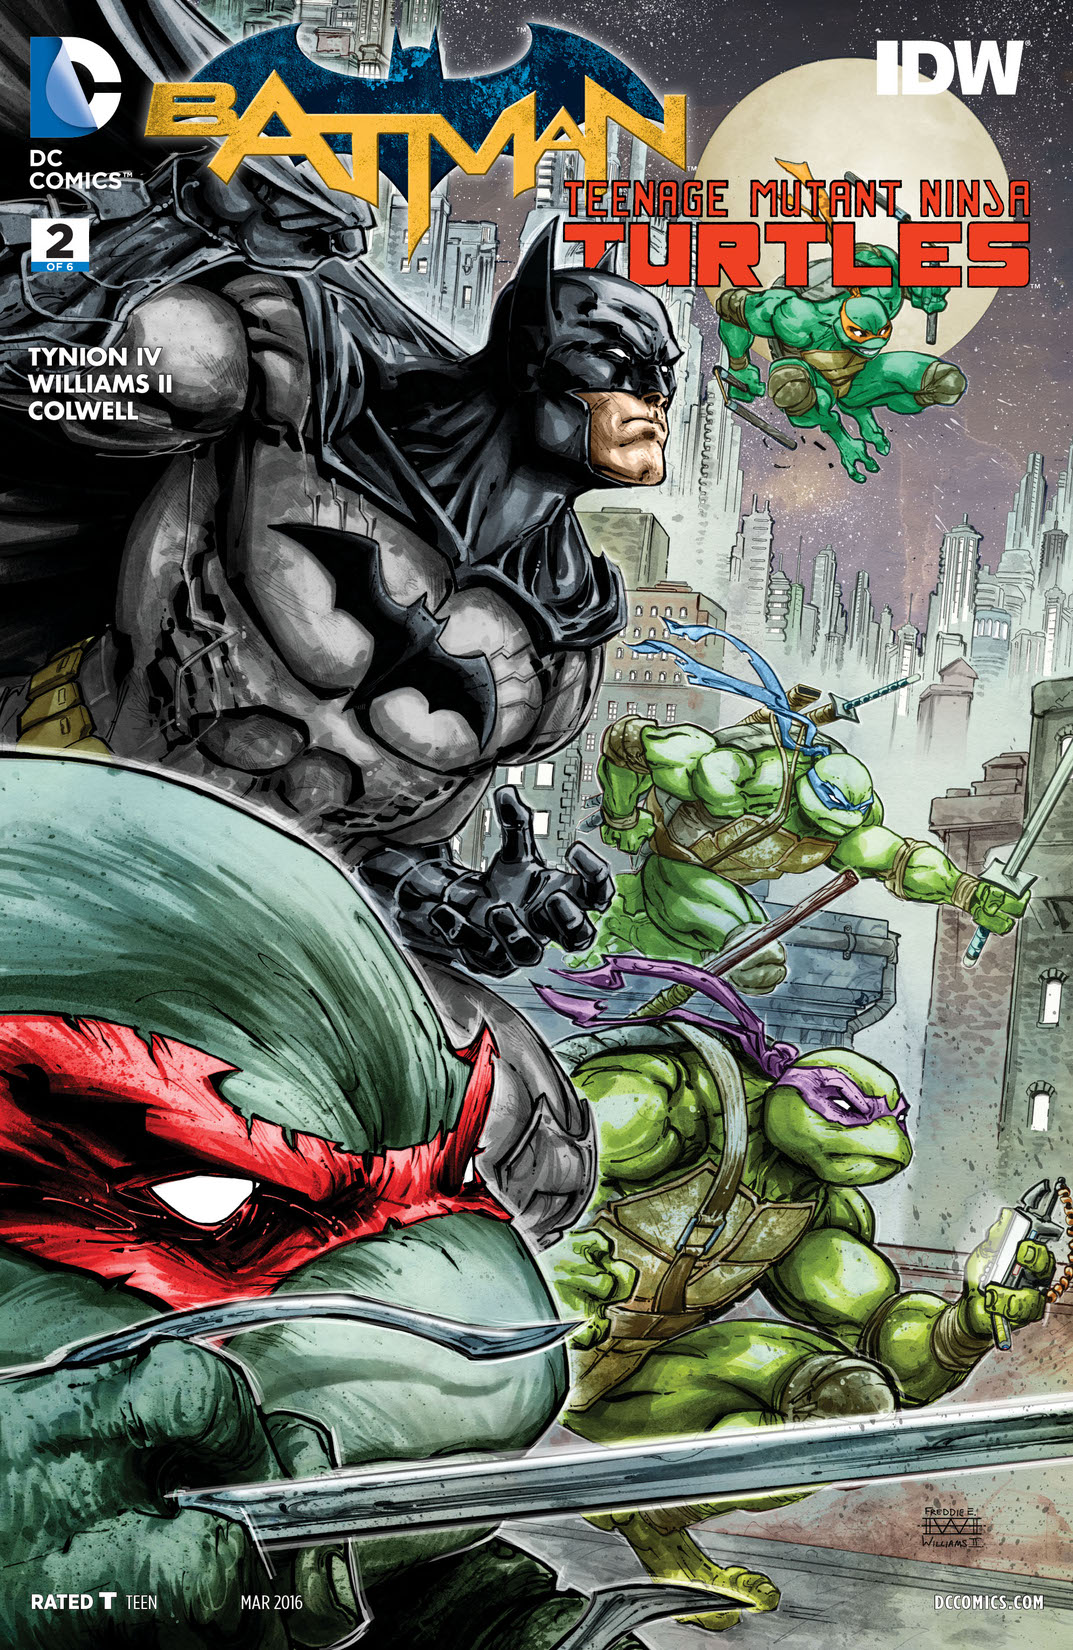 Batman/Teenage Mutant Ninja Turtles #2 preview images